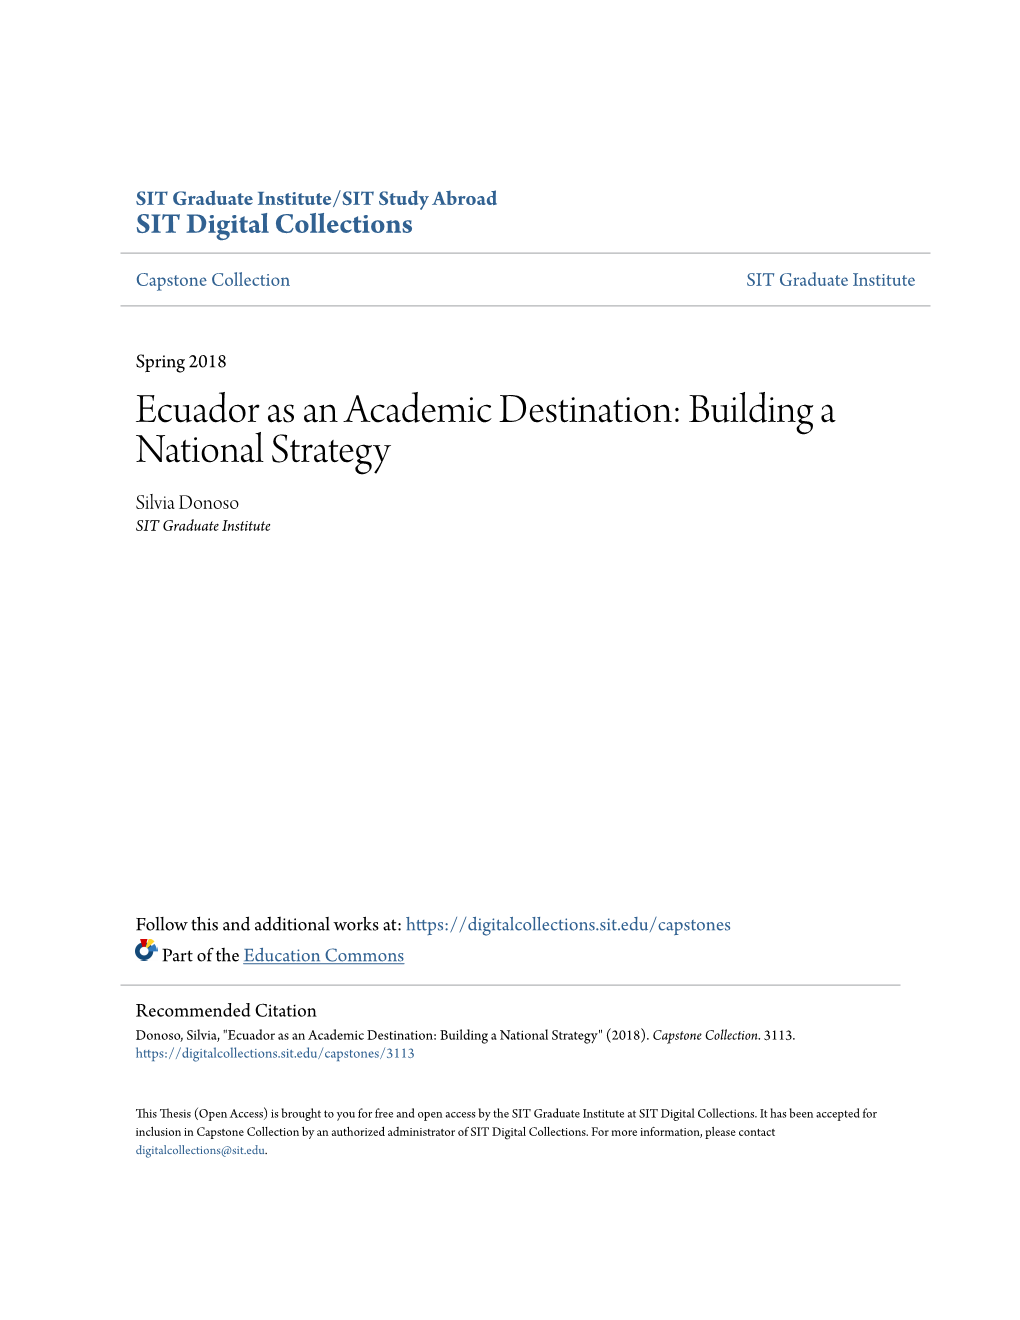 Ecuador As an Academic Destination: Building a National Strategy Silvia Donoso SIT Graduate Institute